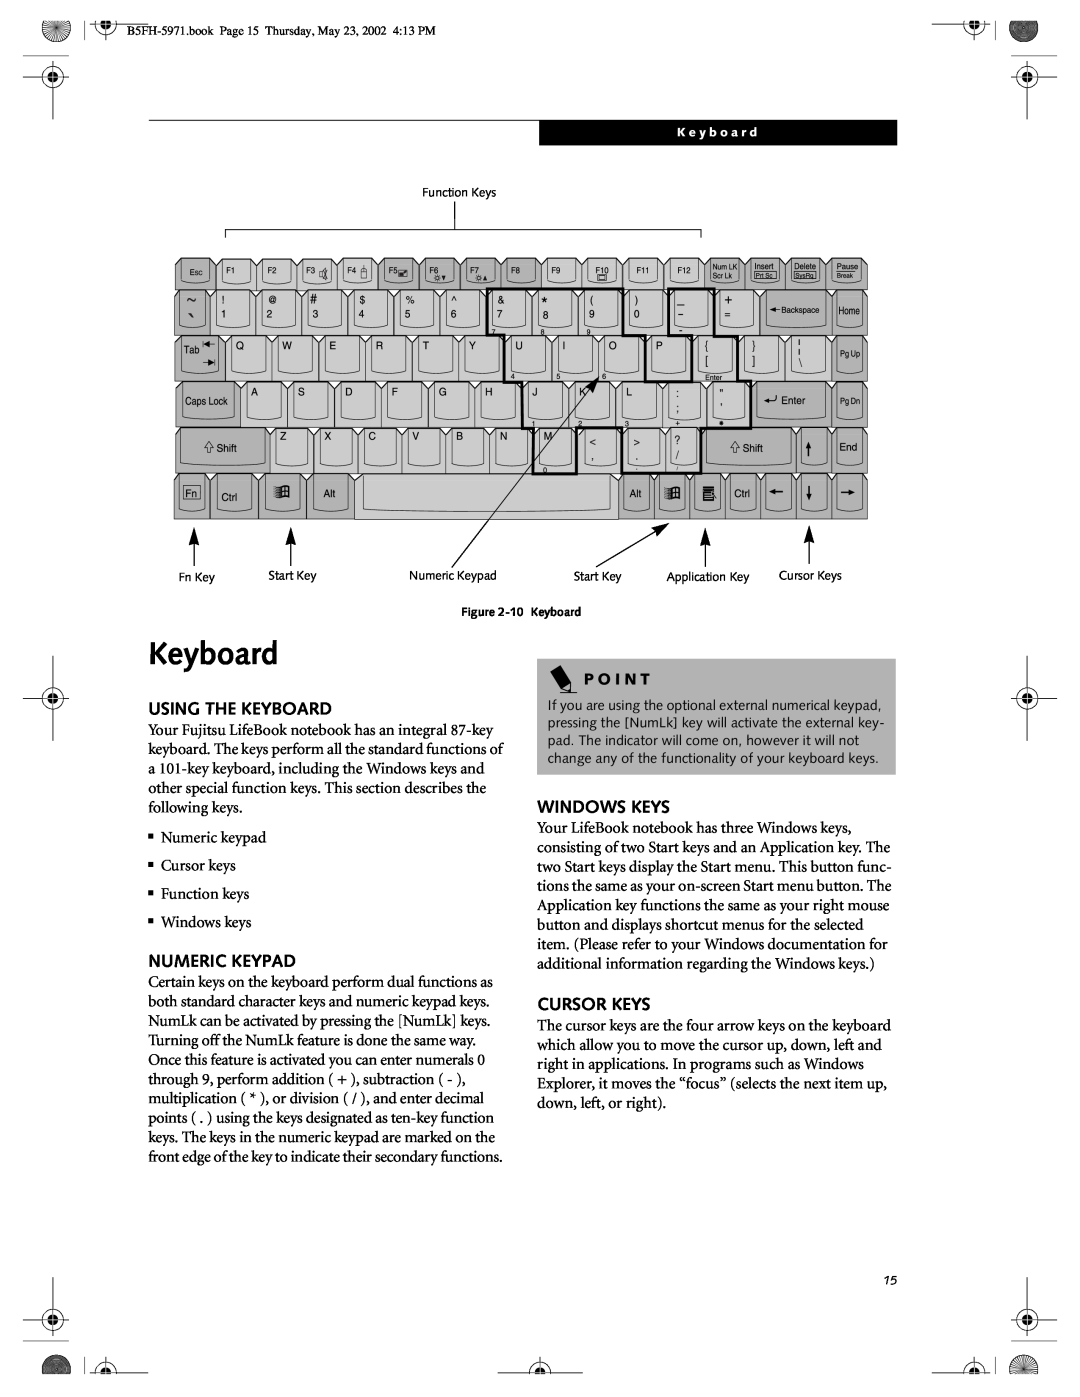 Fujitsu C2010, C2111 manual Using The Keyboard, Numeric Keypad, Windows Keys, Cursor Keys, P O I N T 